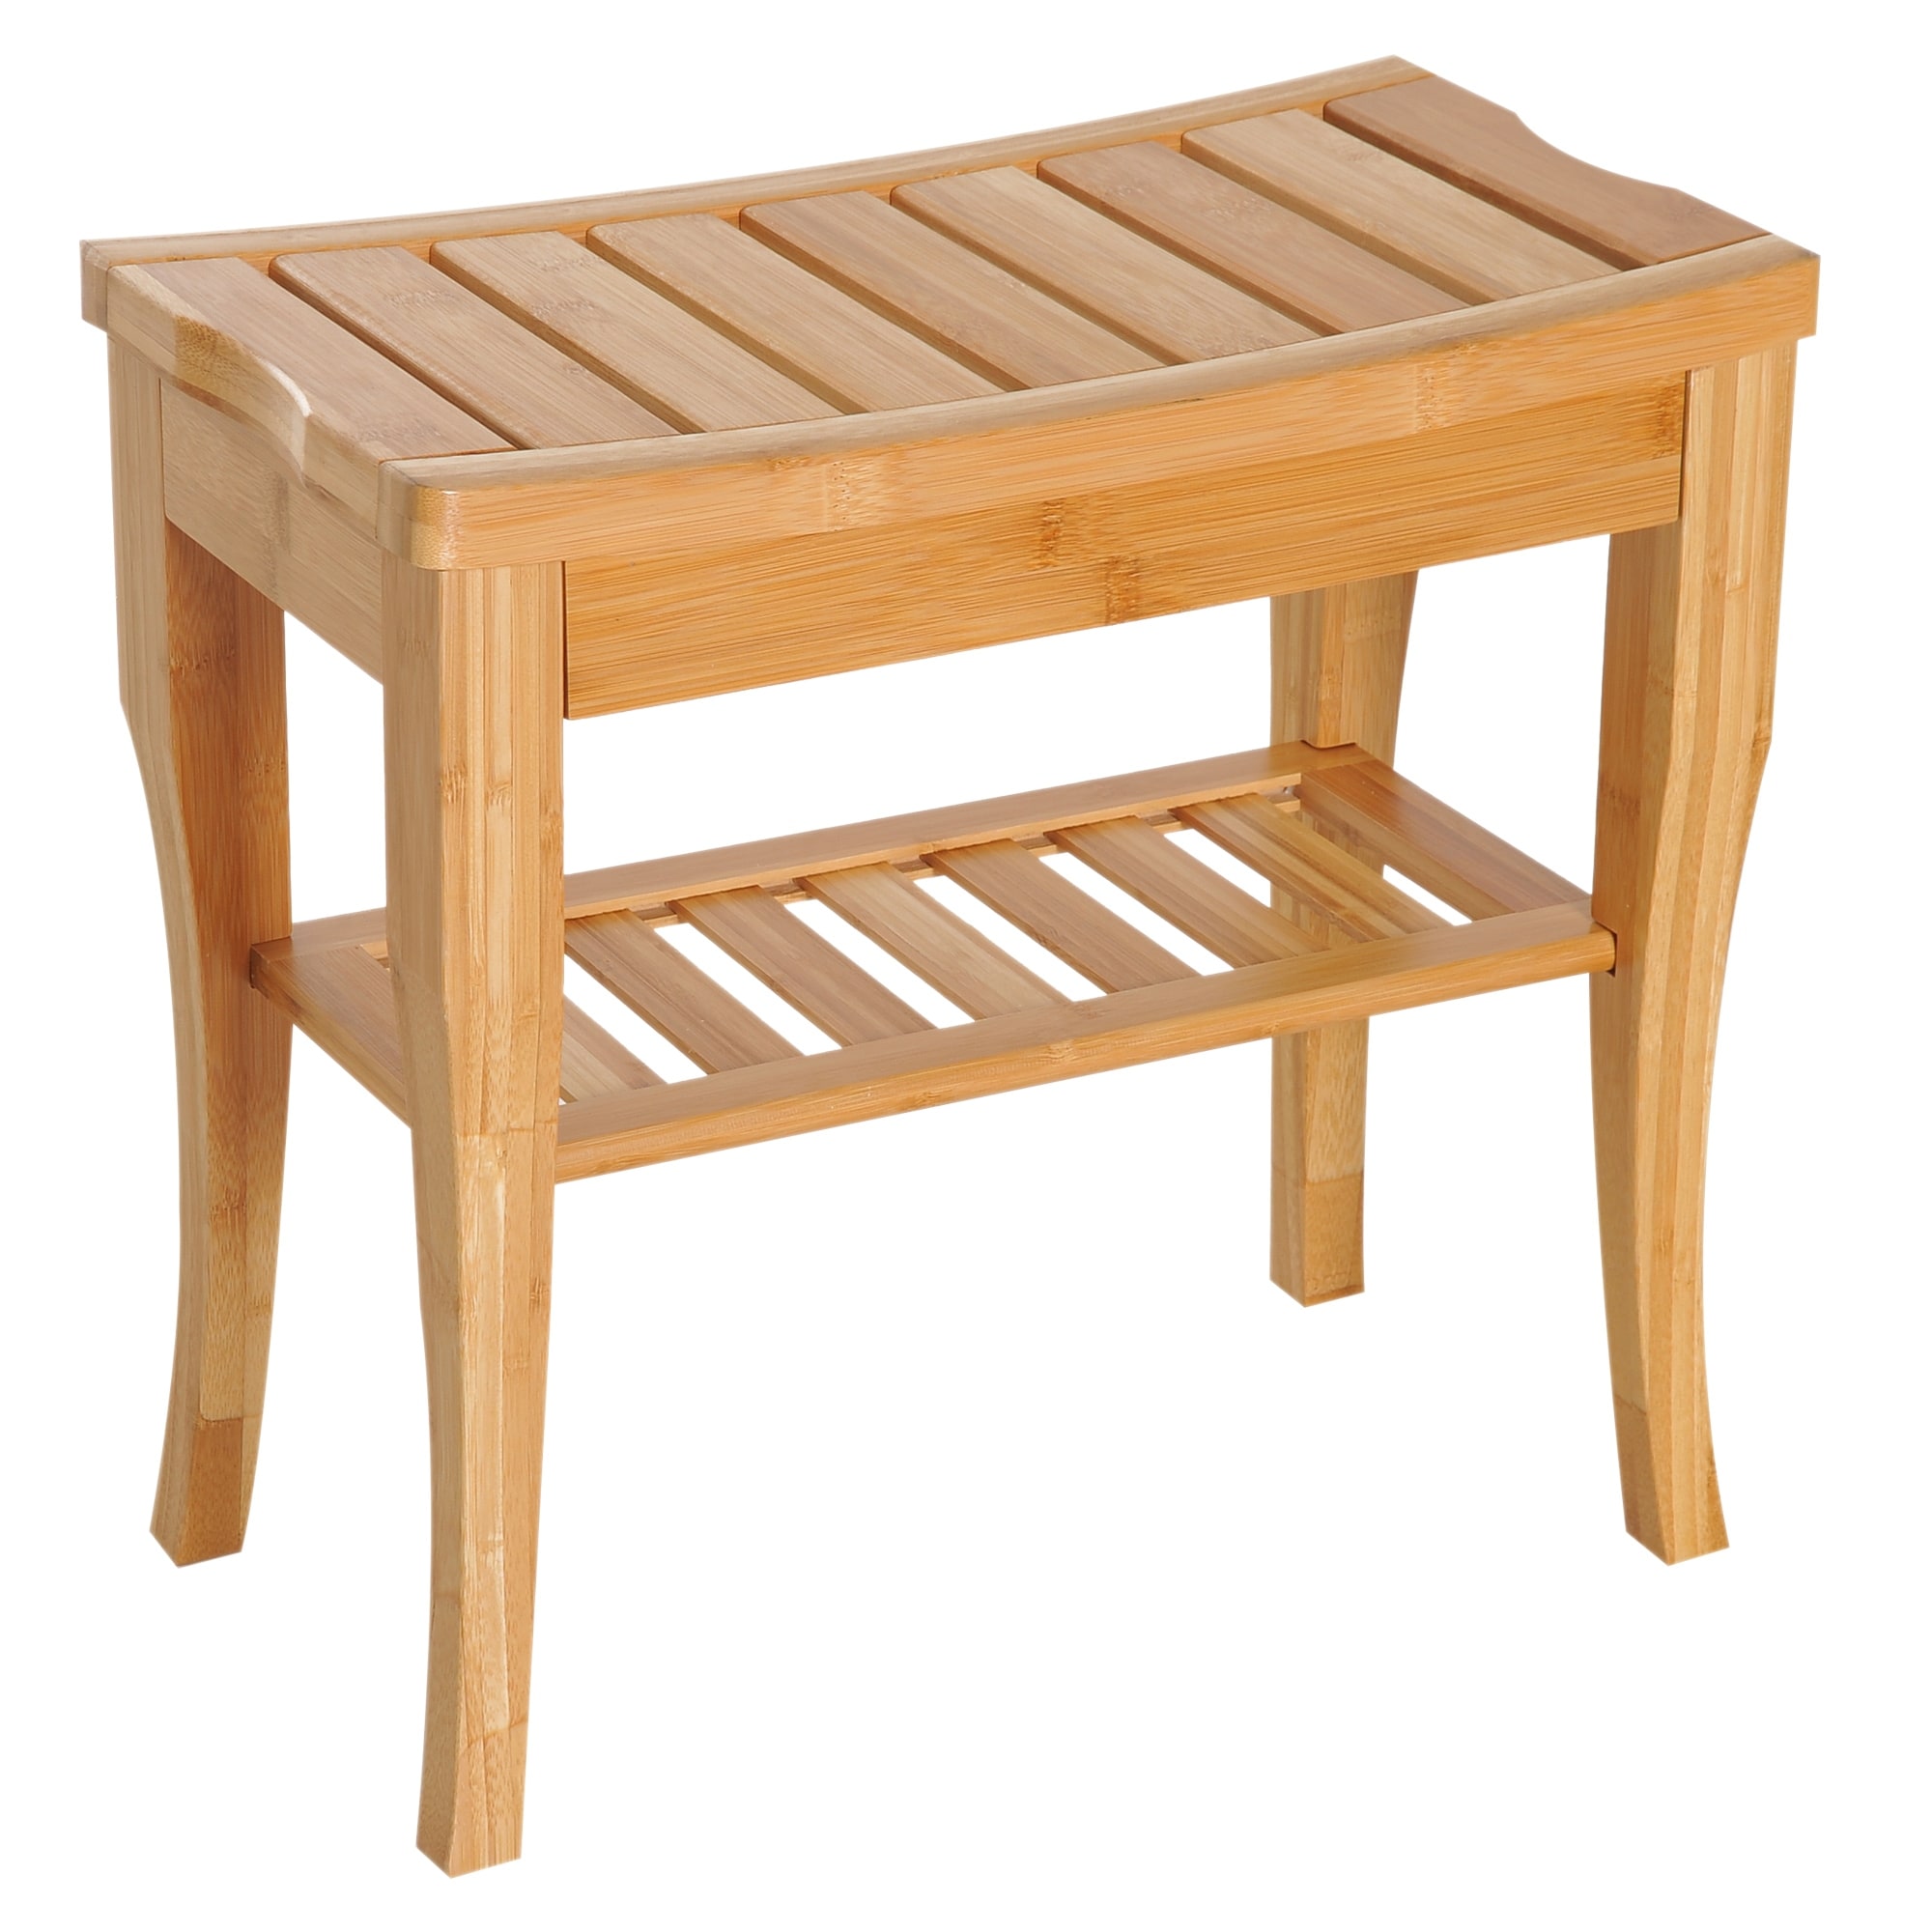 HomCom 20" Long Bamboo Wood Shower Bench Seat With Lower Storage Shelf - 10.25*19.75*17.5